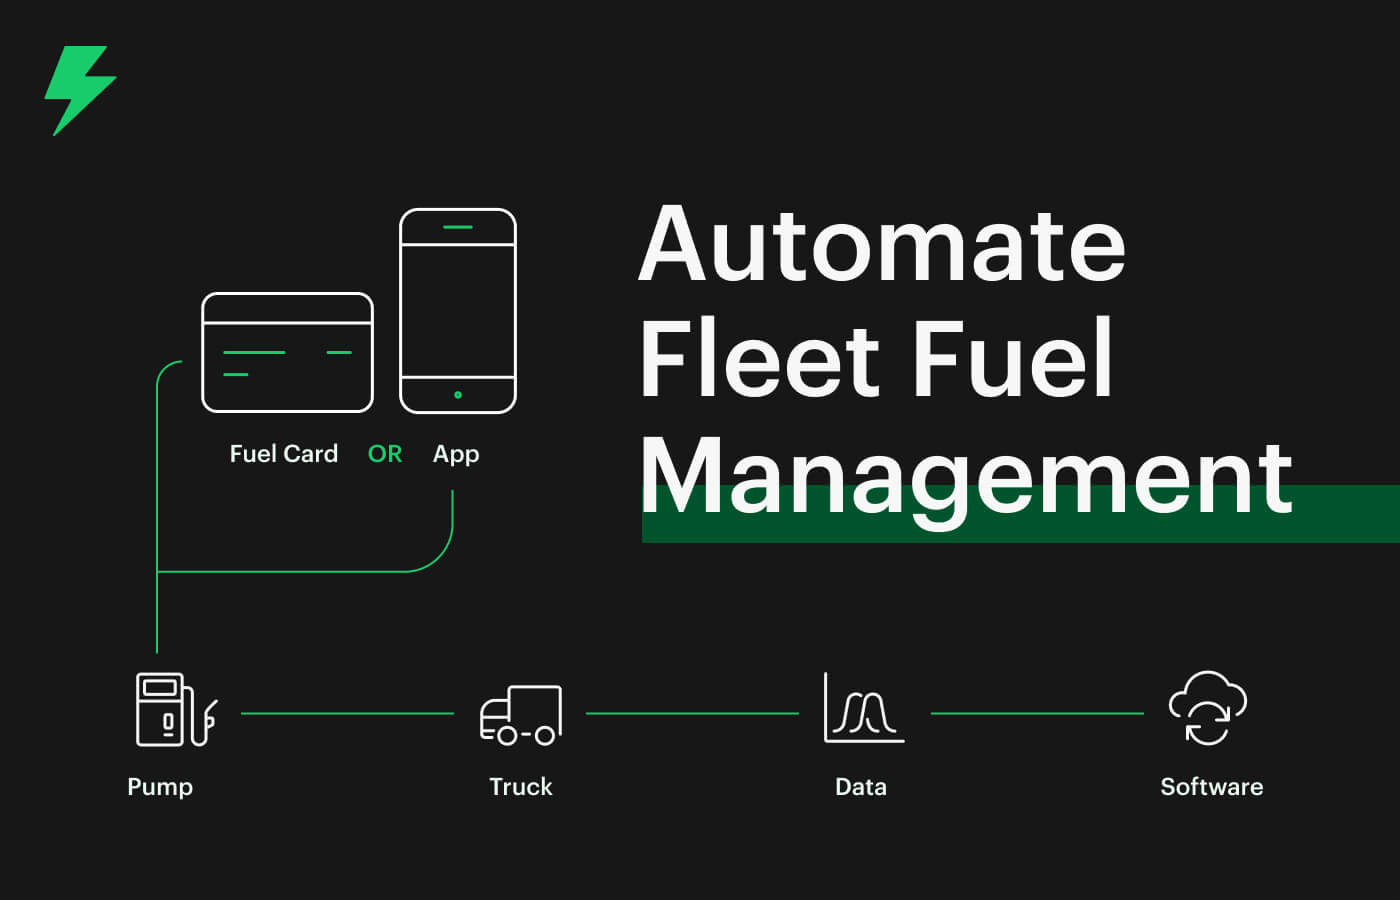 Fleet fuel management